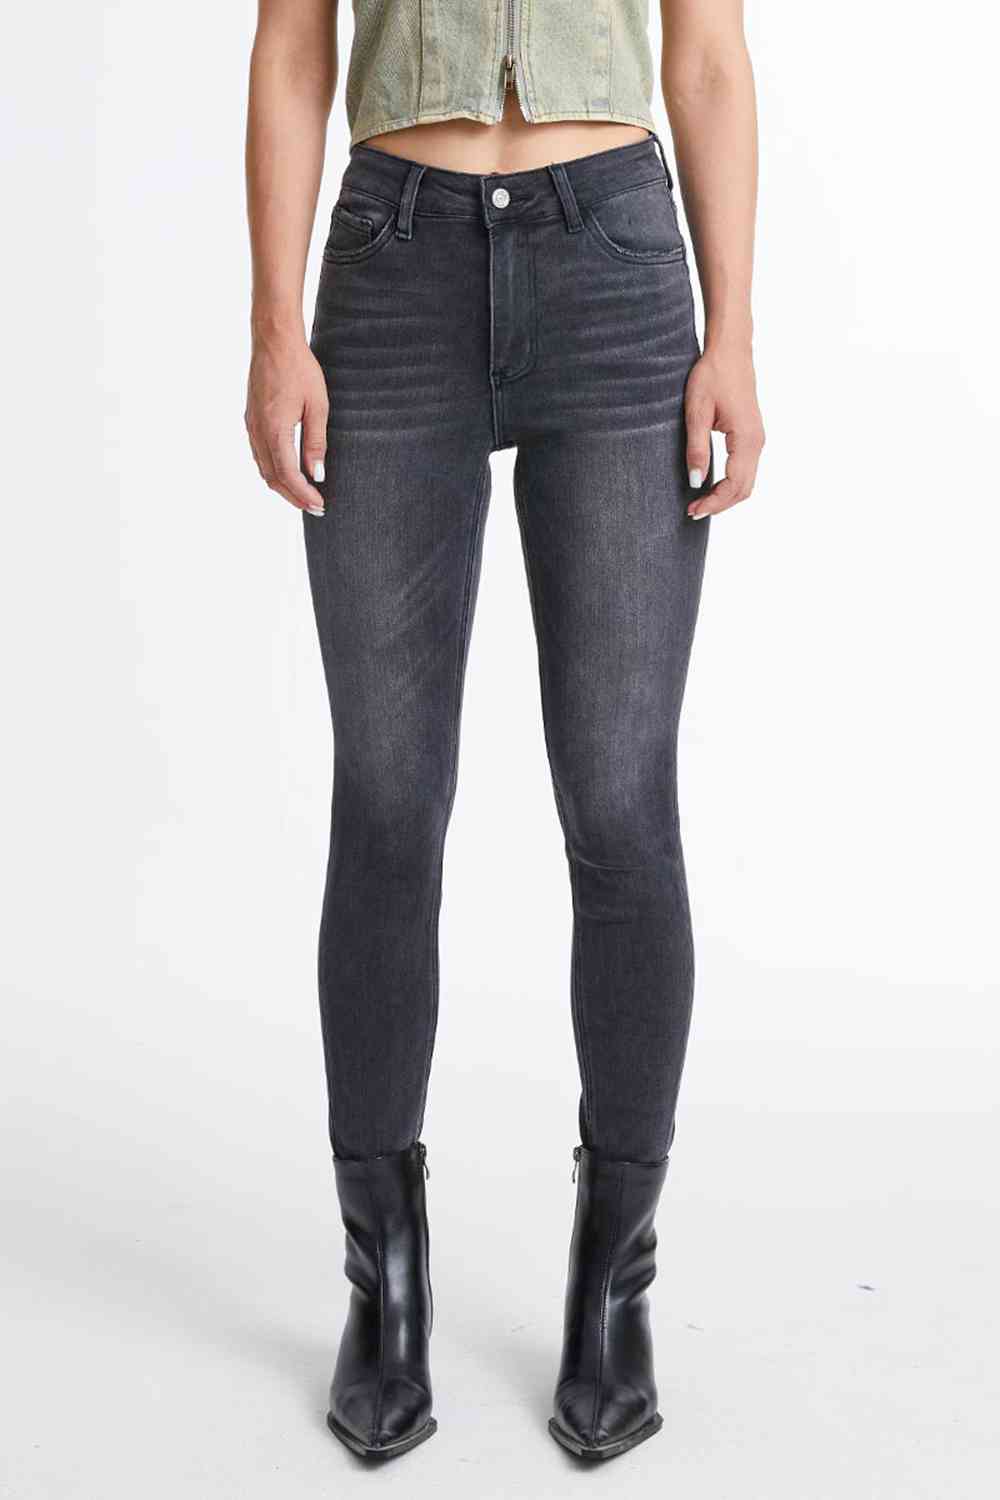 BAYEAS Cropped Skinny Jeans-Trendsi-JipsiJunk